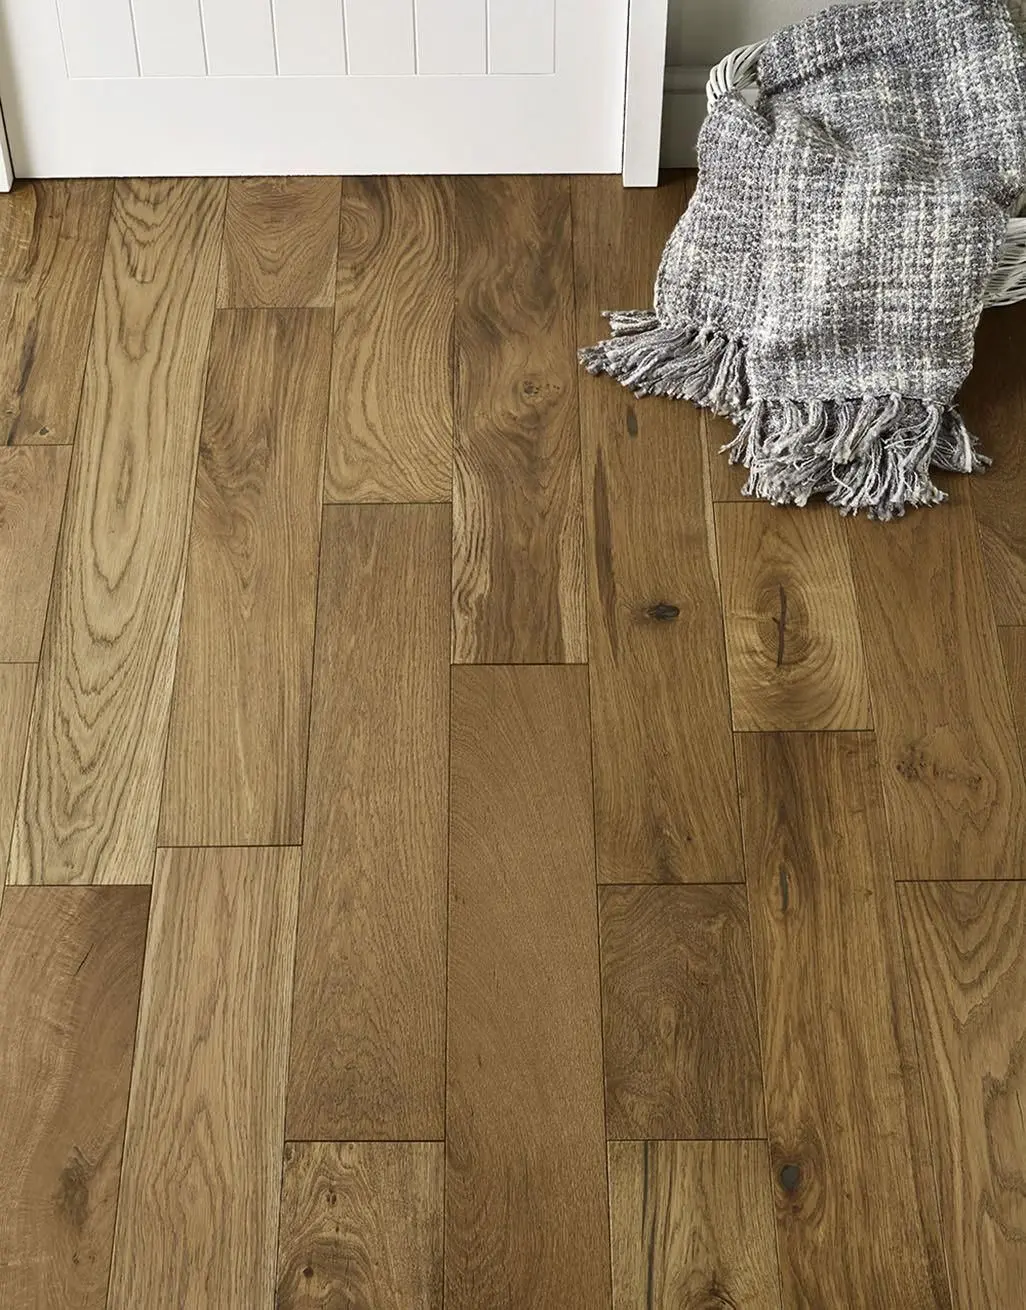 smoked oak flooring uk - Which oak is best for flooring